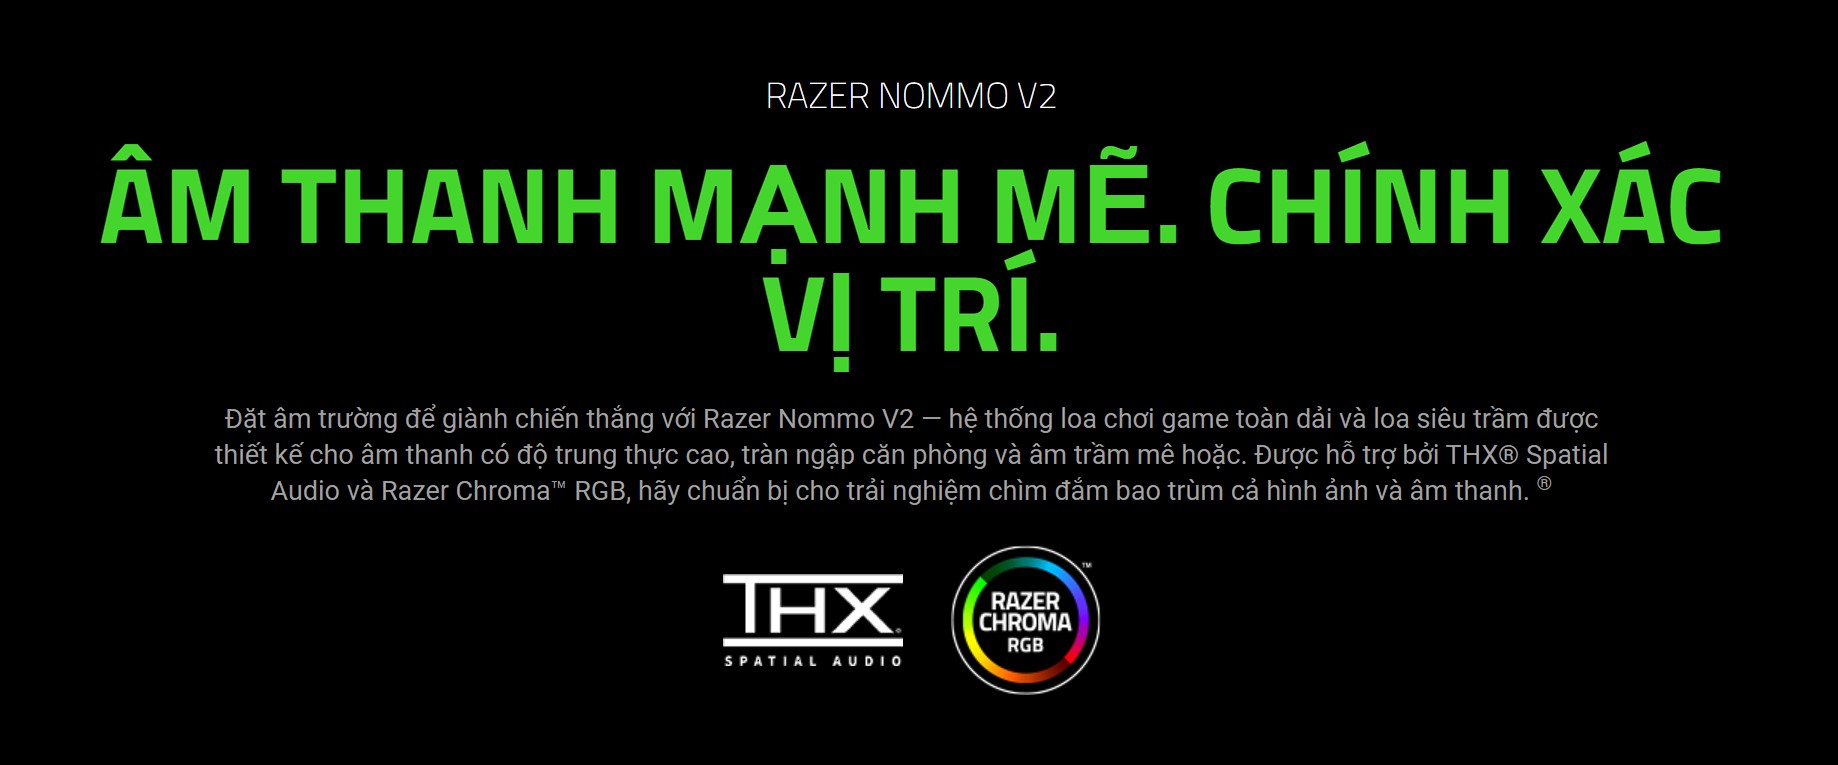 Loa Razer Nommo V2 - 2.1 - Màu đen